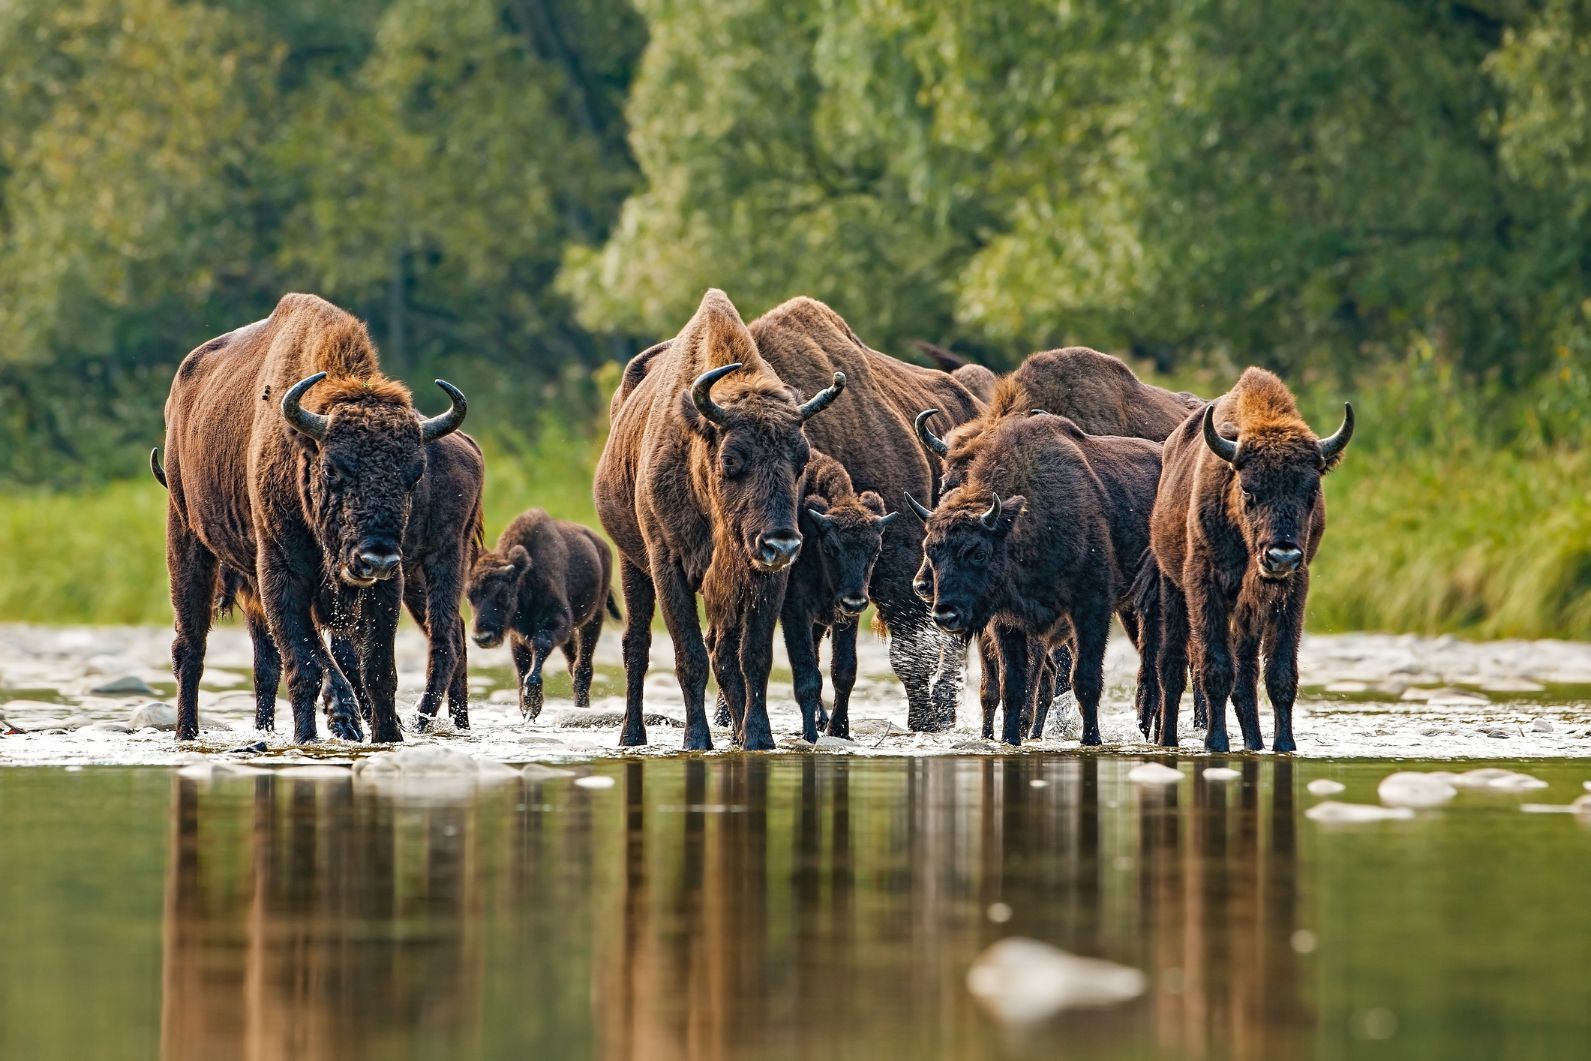 Wild bison roaming free in Romania.